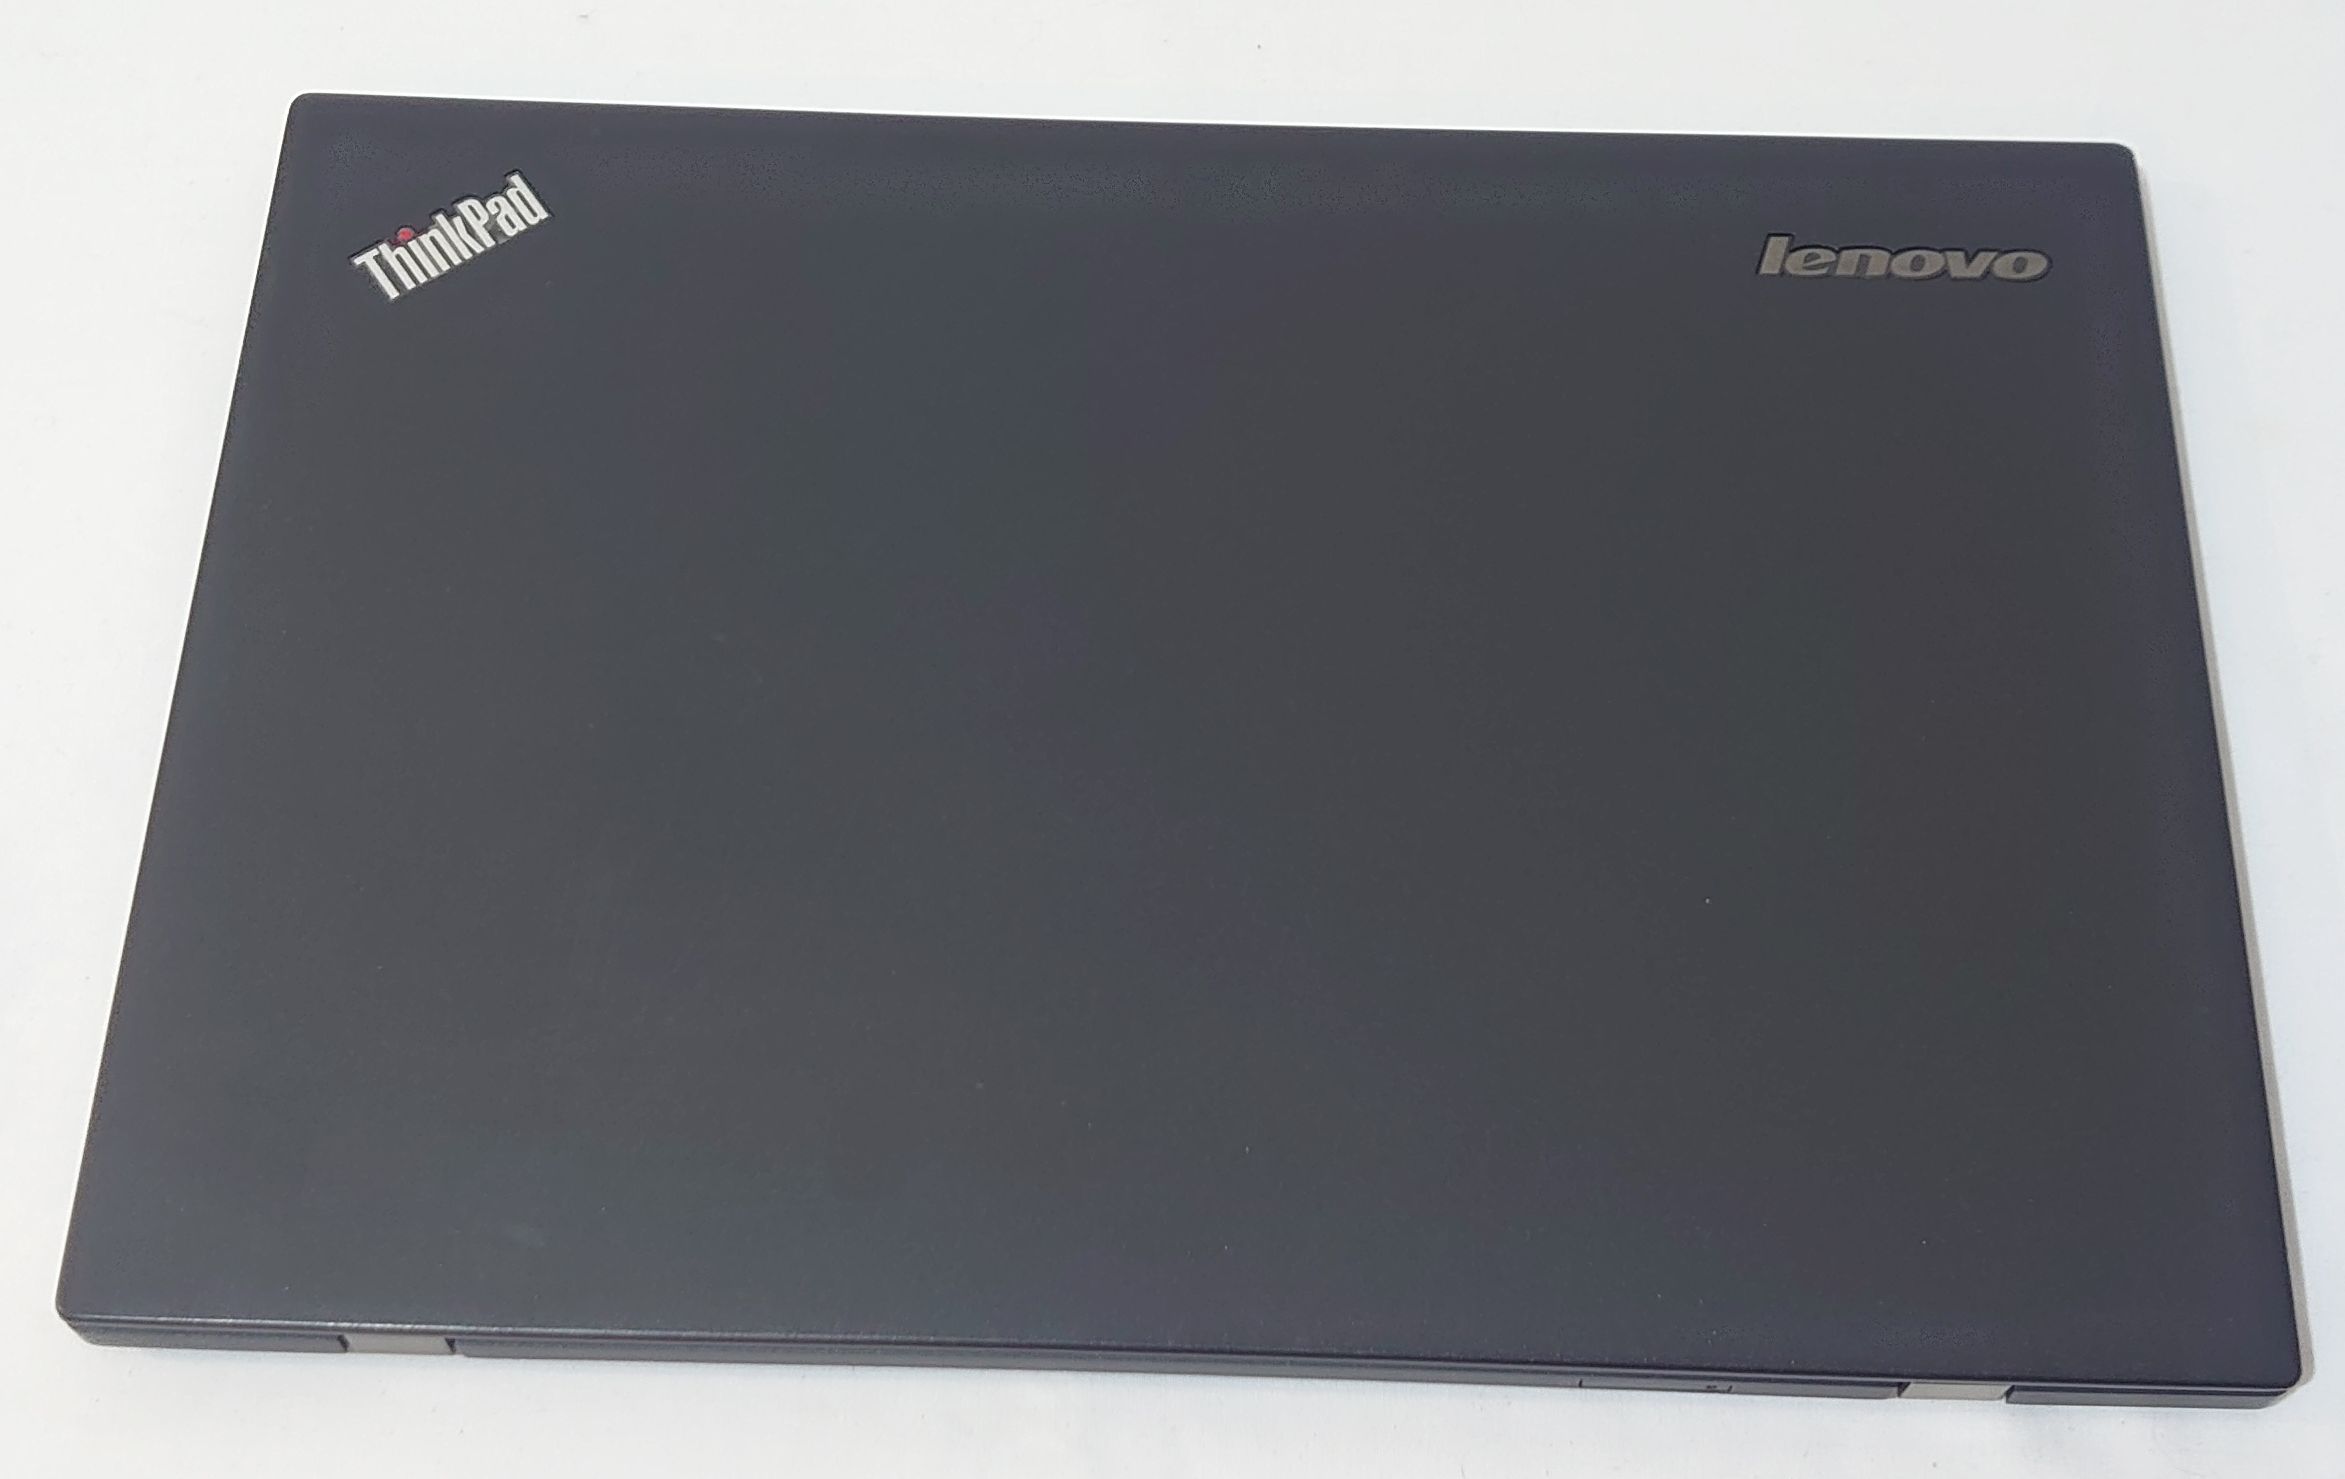 Lenovo ThinkPad X1 Carbon i7, 8GB RAM (LO169)